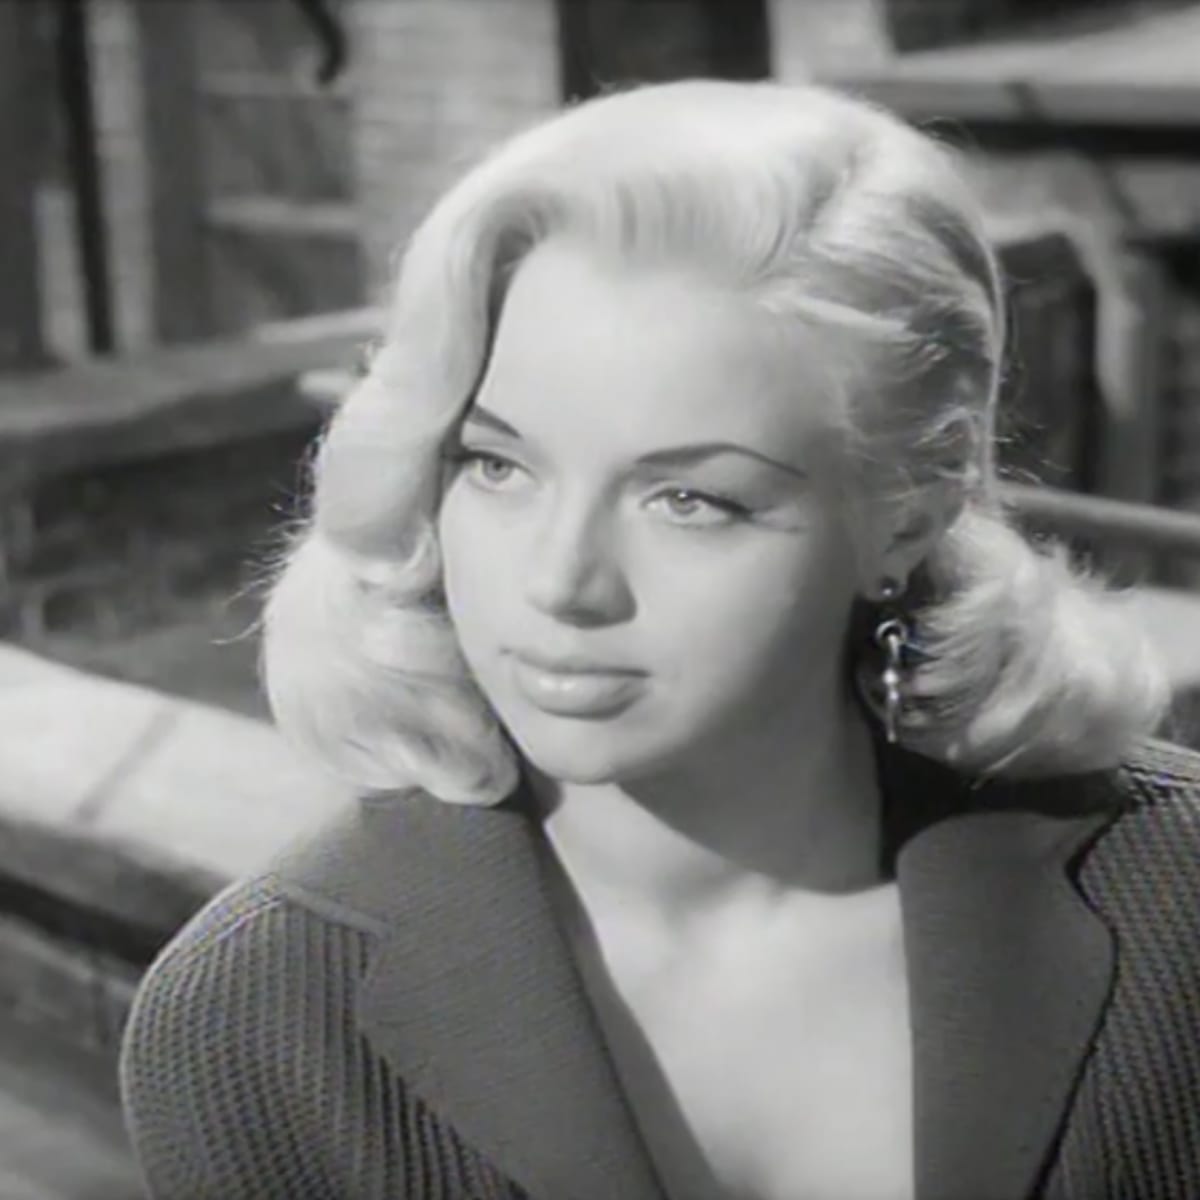 Blonde shows a Marilyn Monroe robbed of motherhood